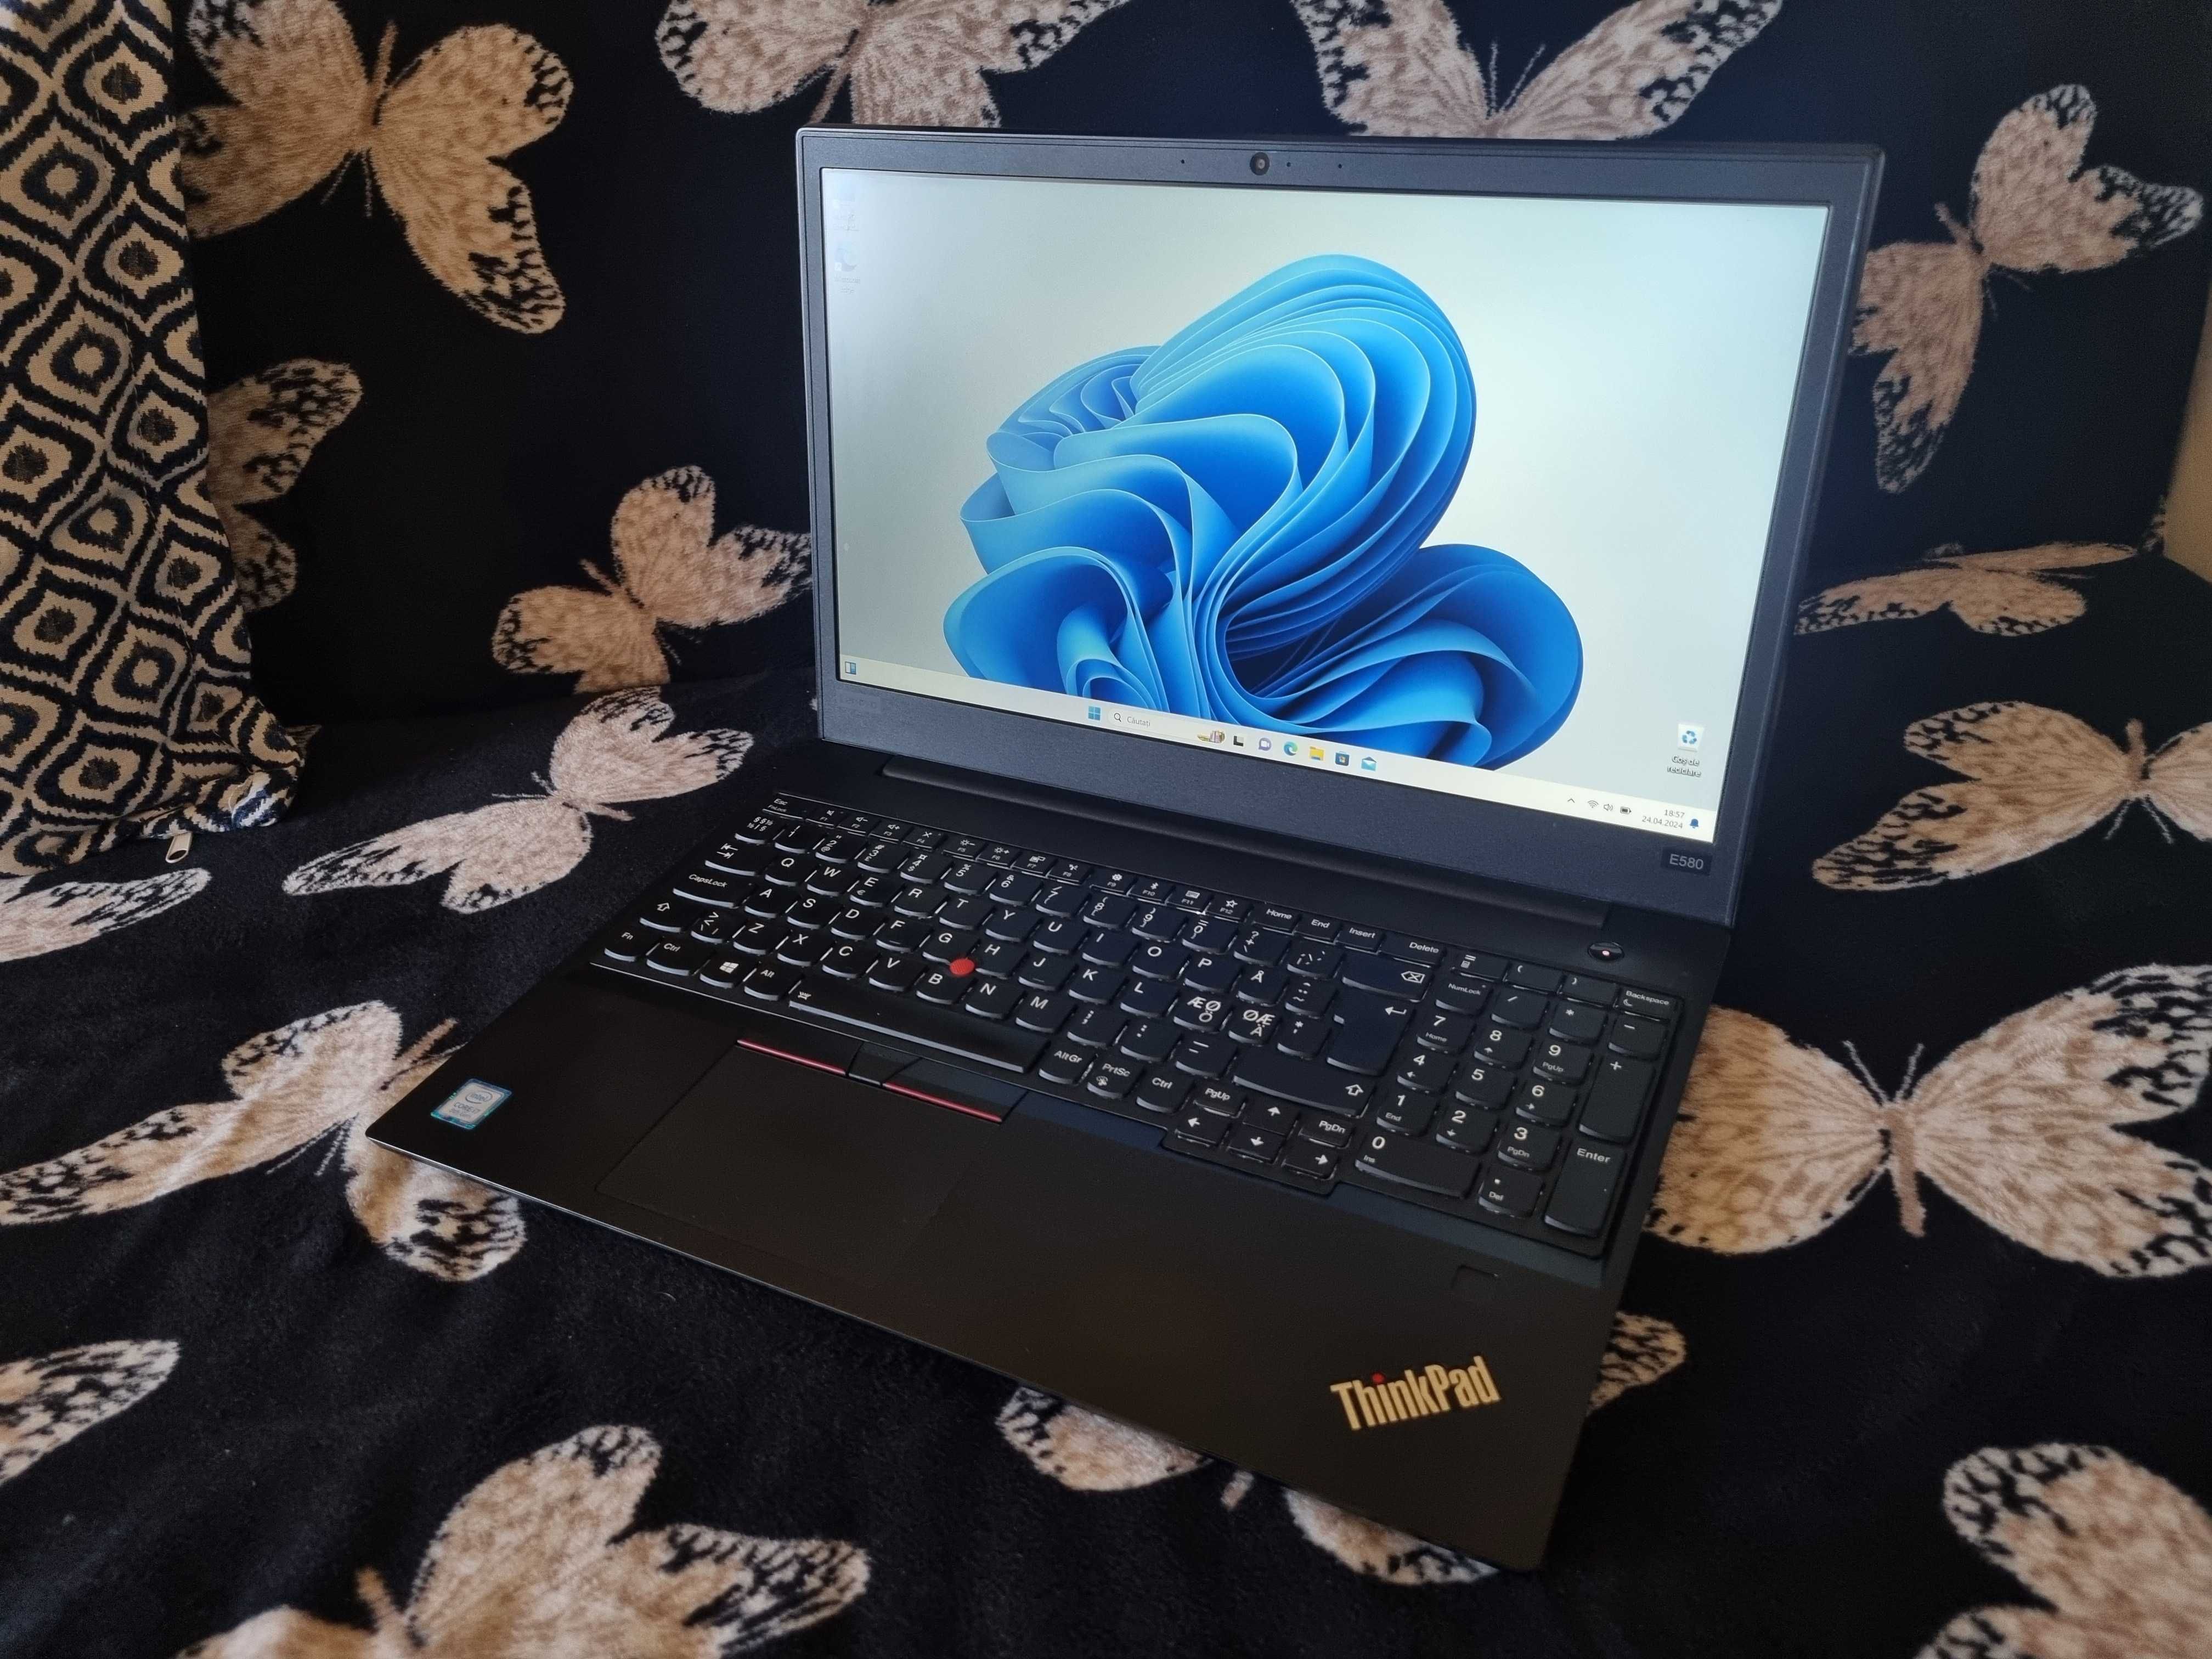 Lenovo ThinkPad cu i7 cu 16Gb ddr4 ram, ssd 256 (Laptop Nou ne Folosit